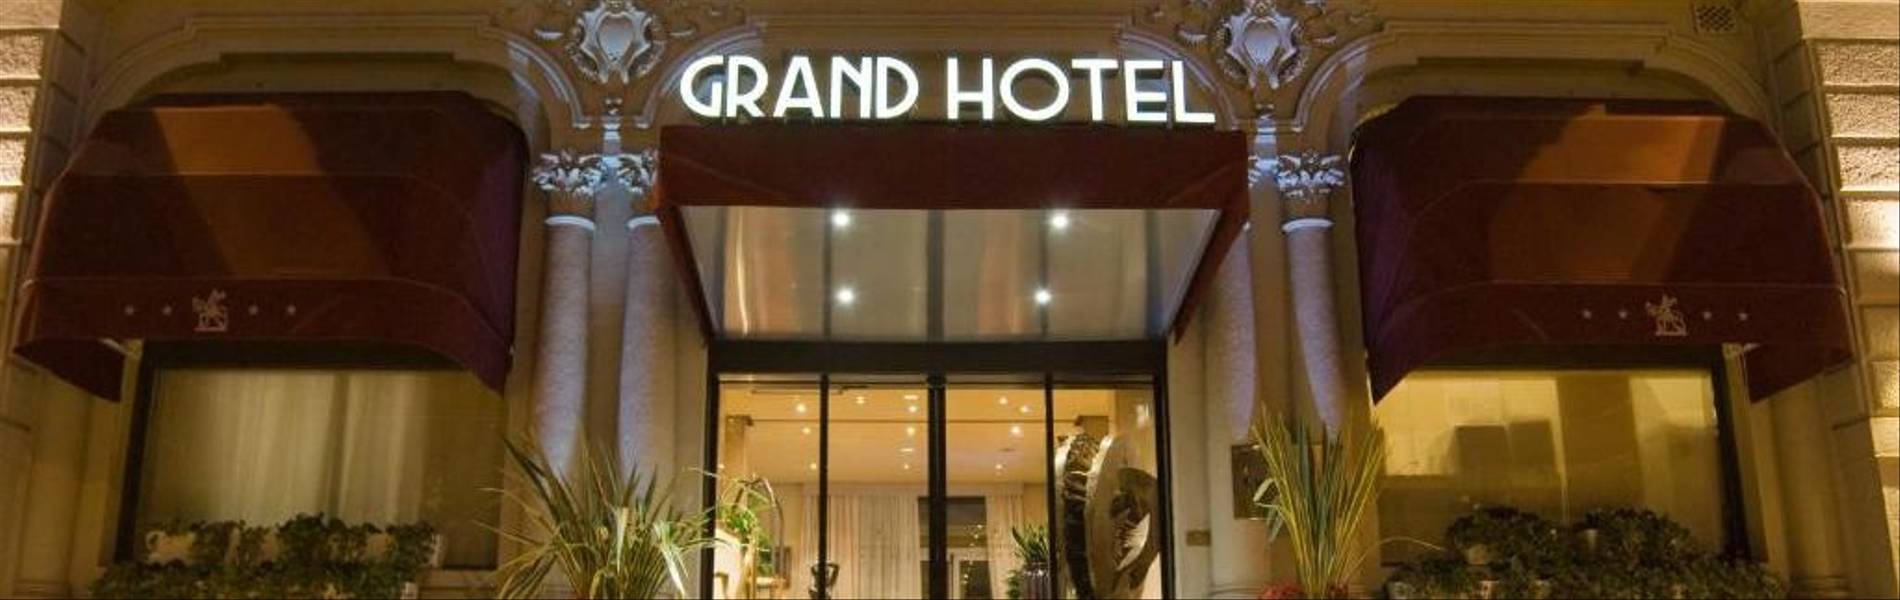 Grand Hotel Des Arts 5.jpg